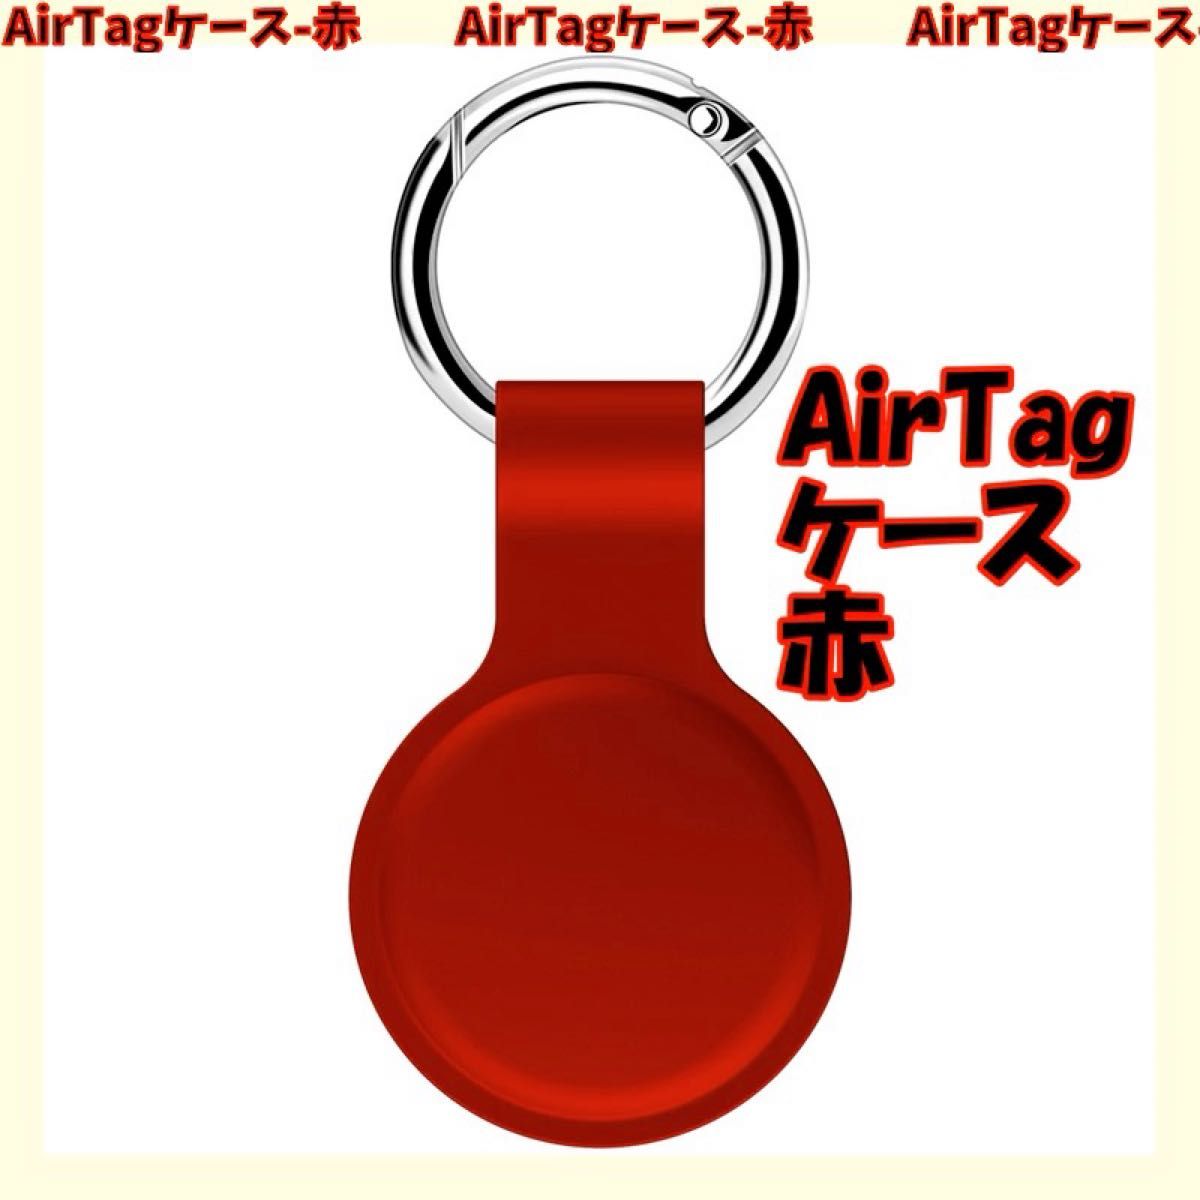 †AirTagケース-赤 シリコン製 エアタグ保護カバー 紛失防止†